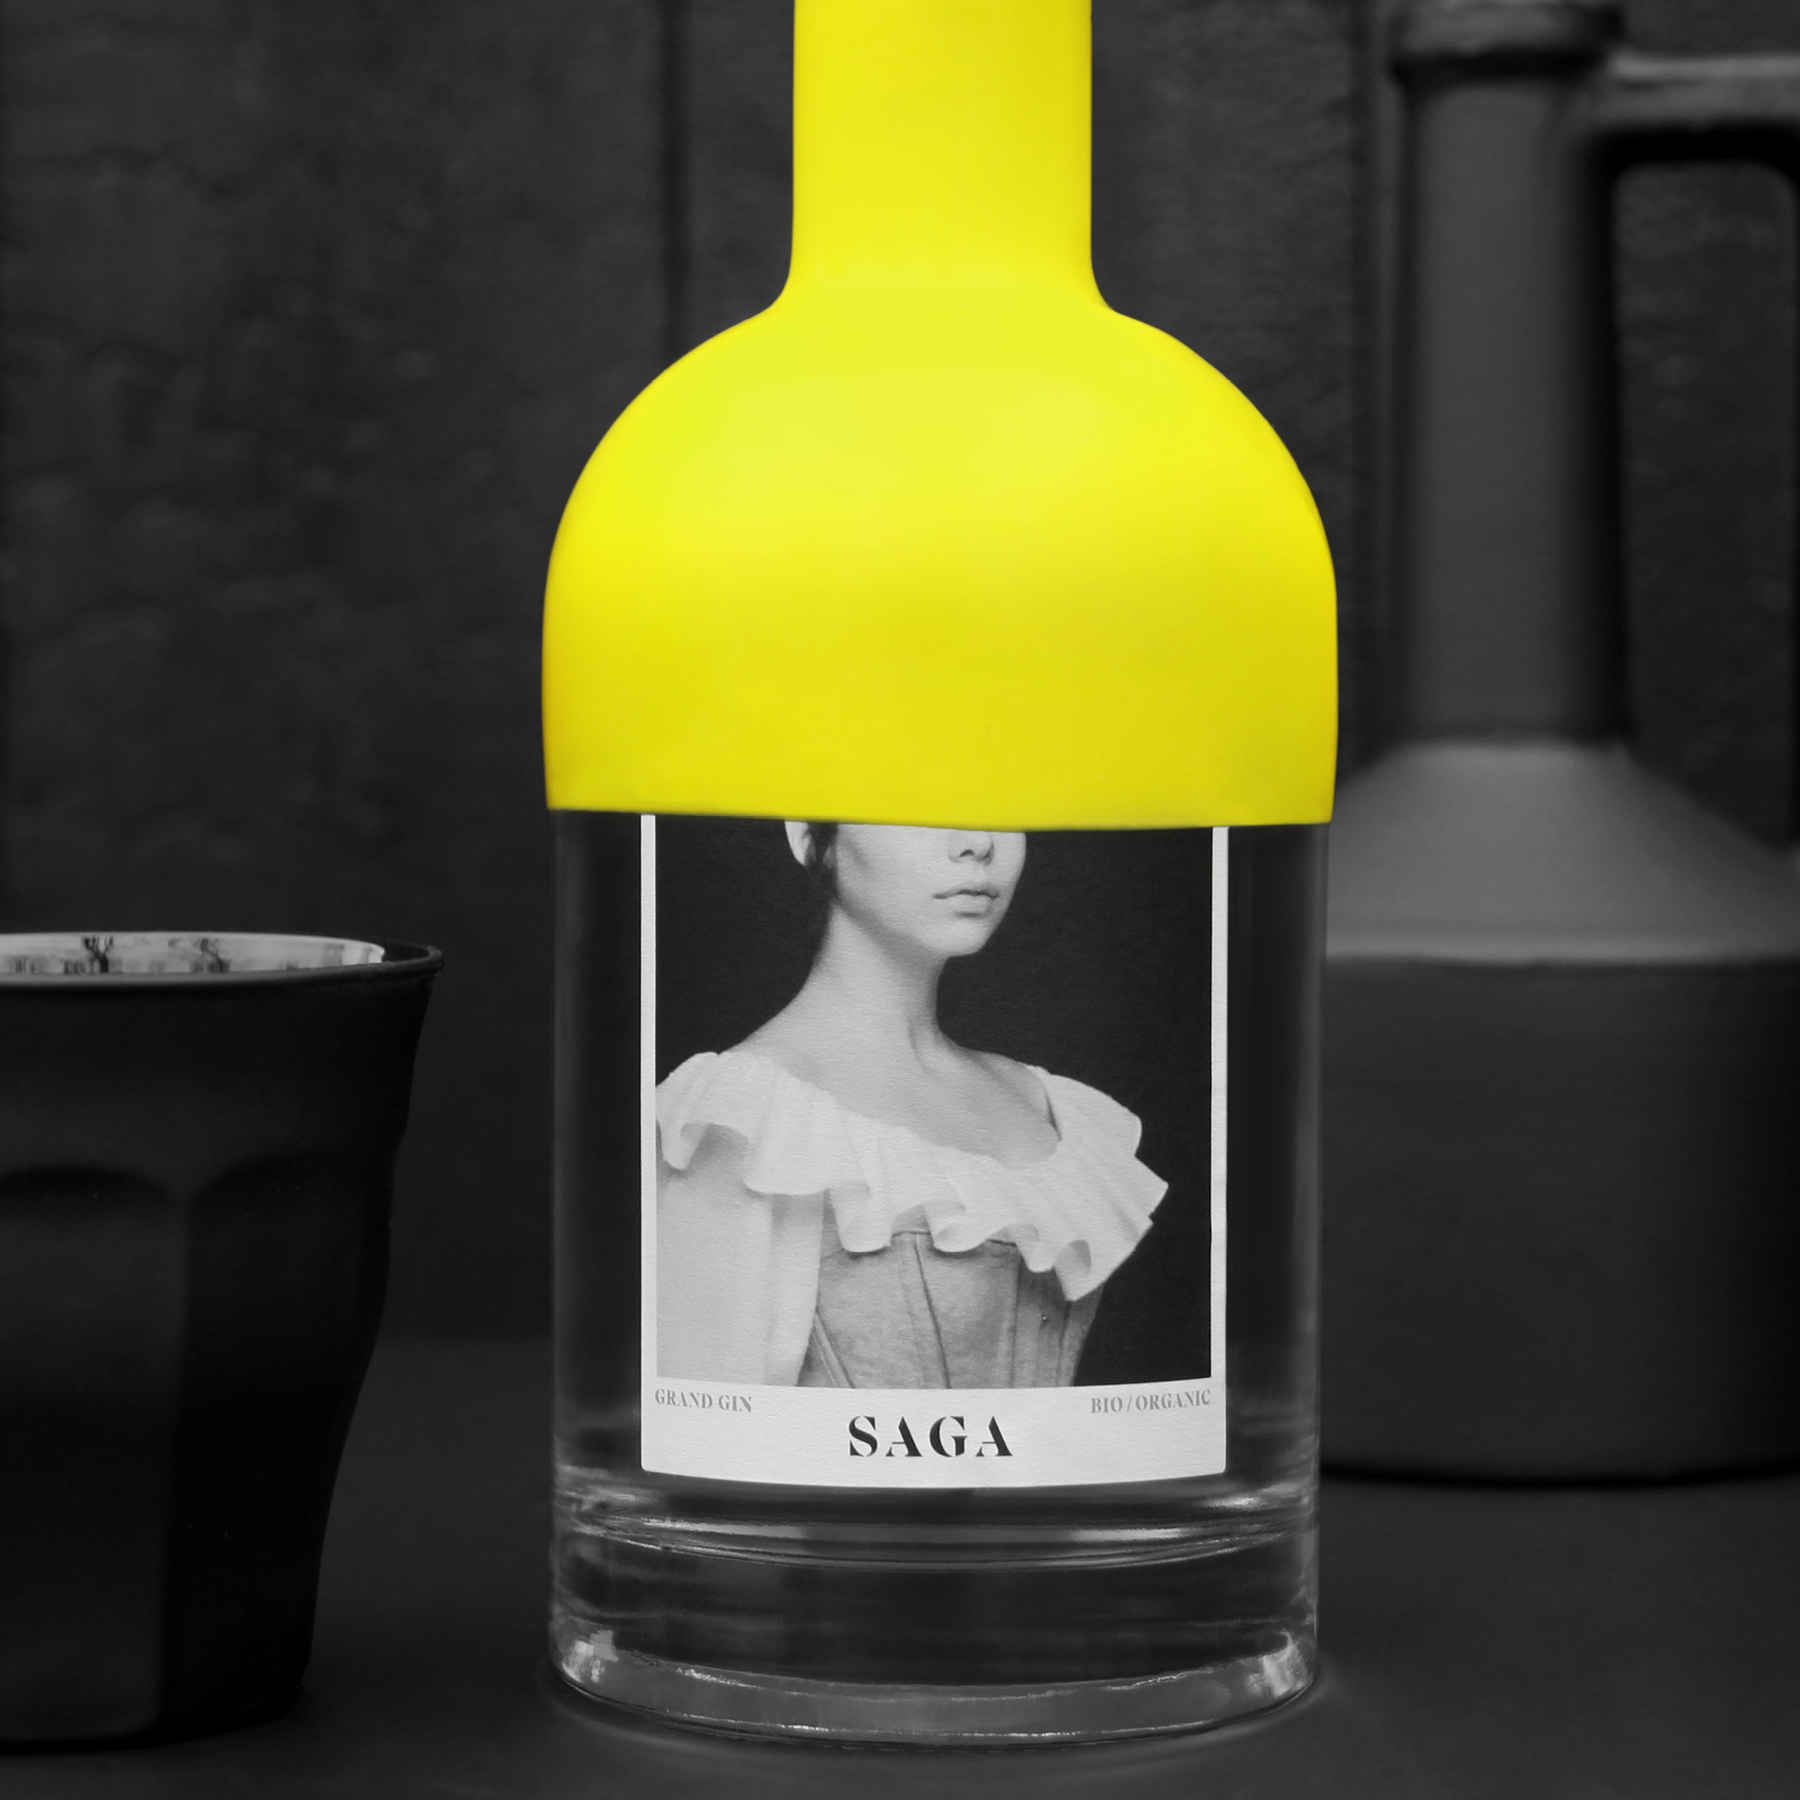 Paprika Creates the Graphic Identity of the SAGA Grand Gin